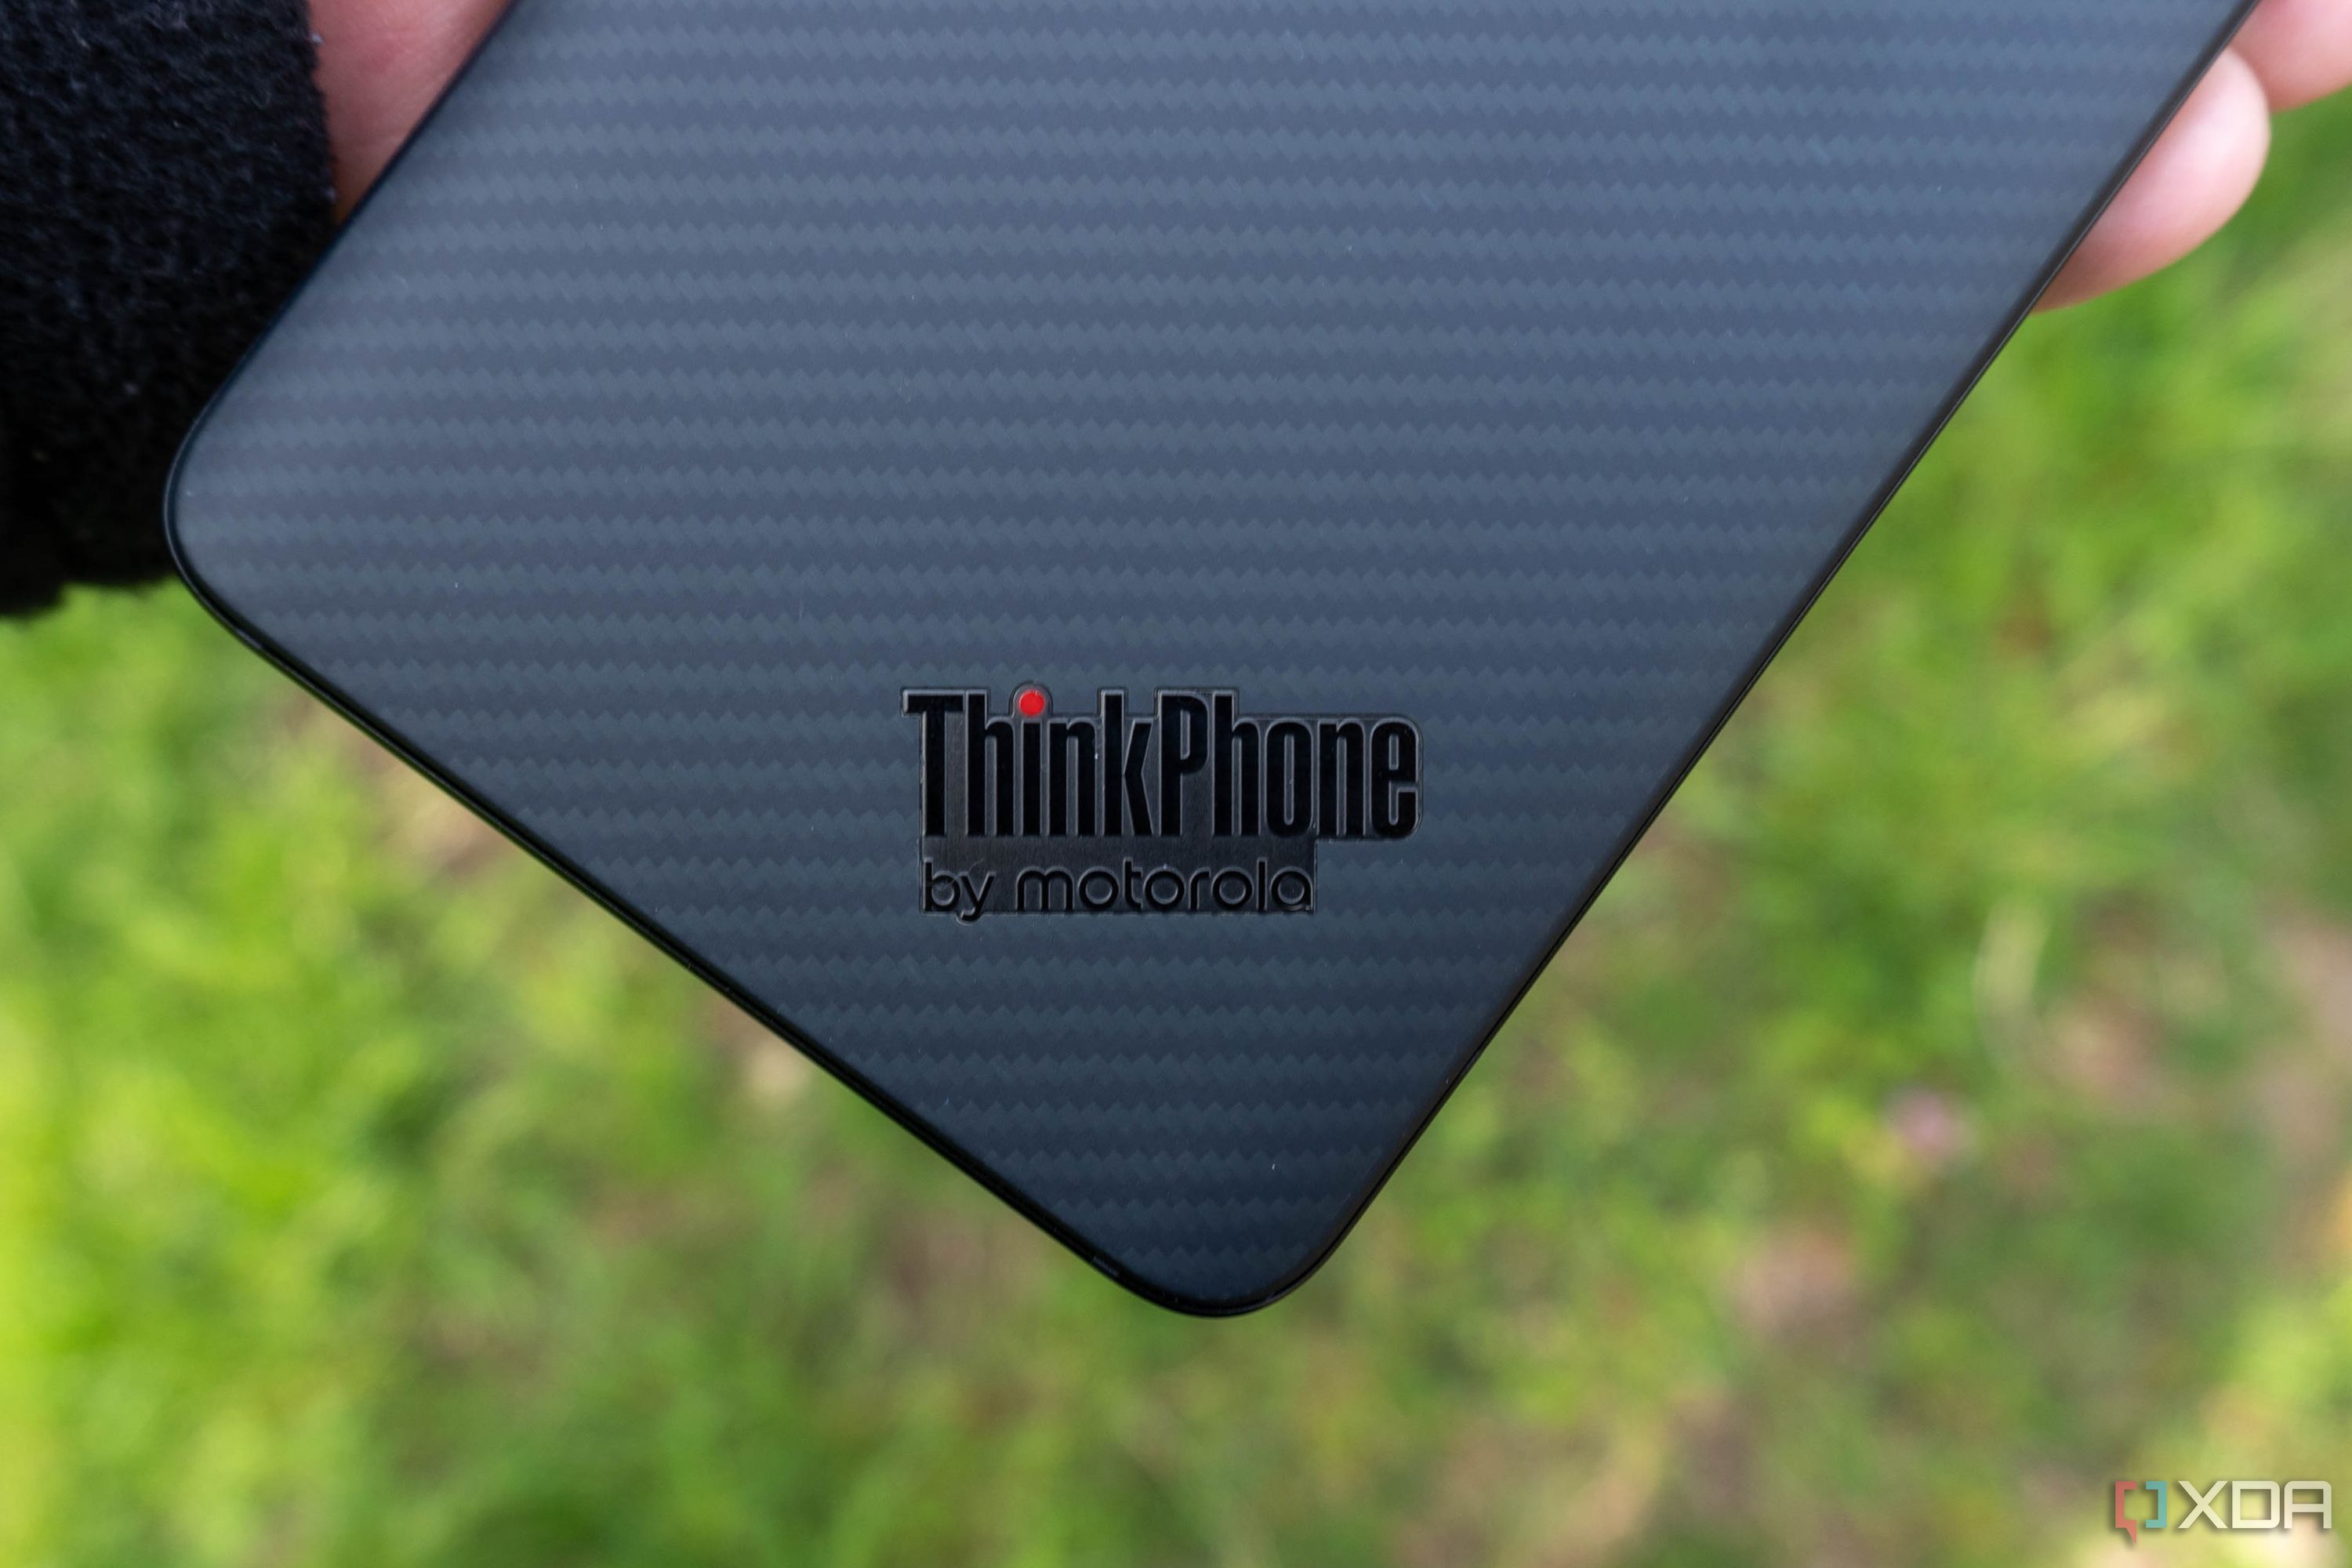 Close up of ThinkPhone by Motorola logo